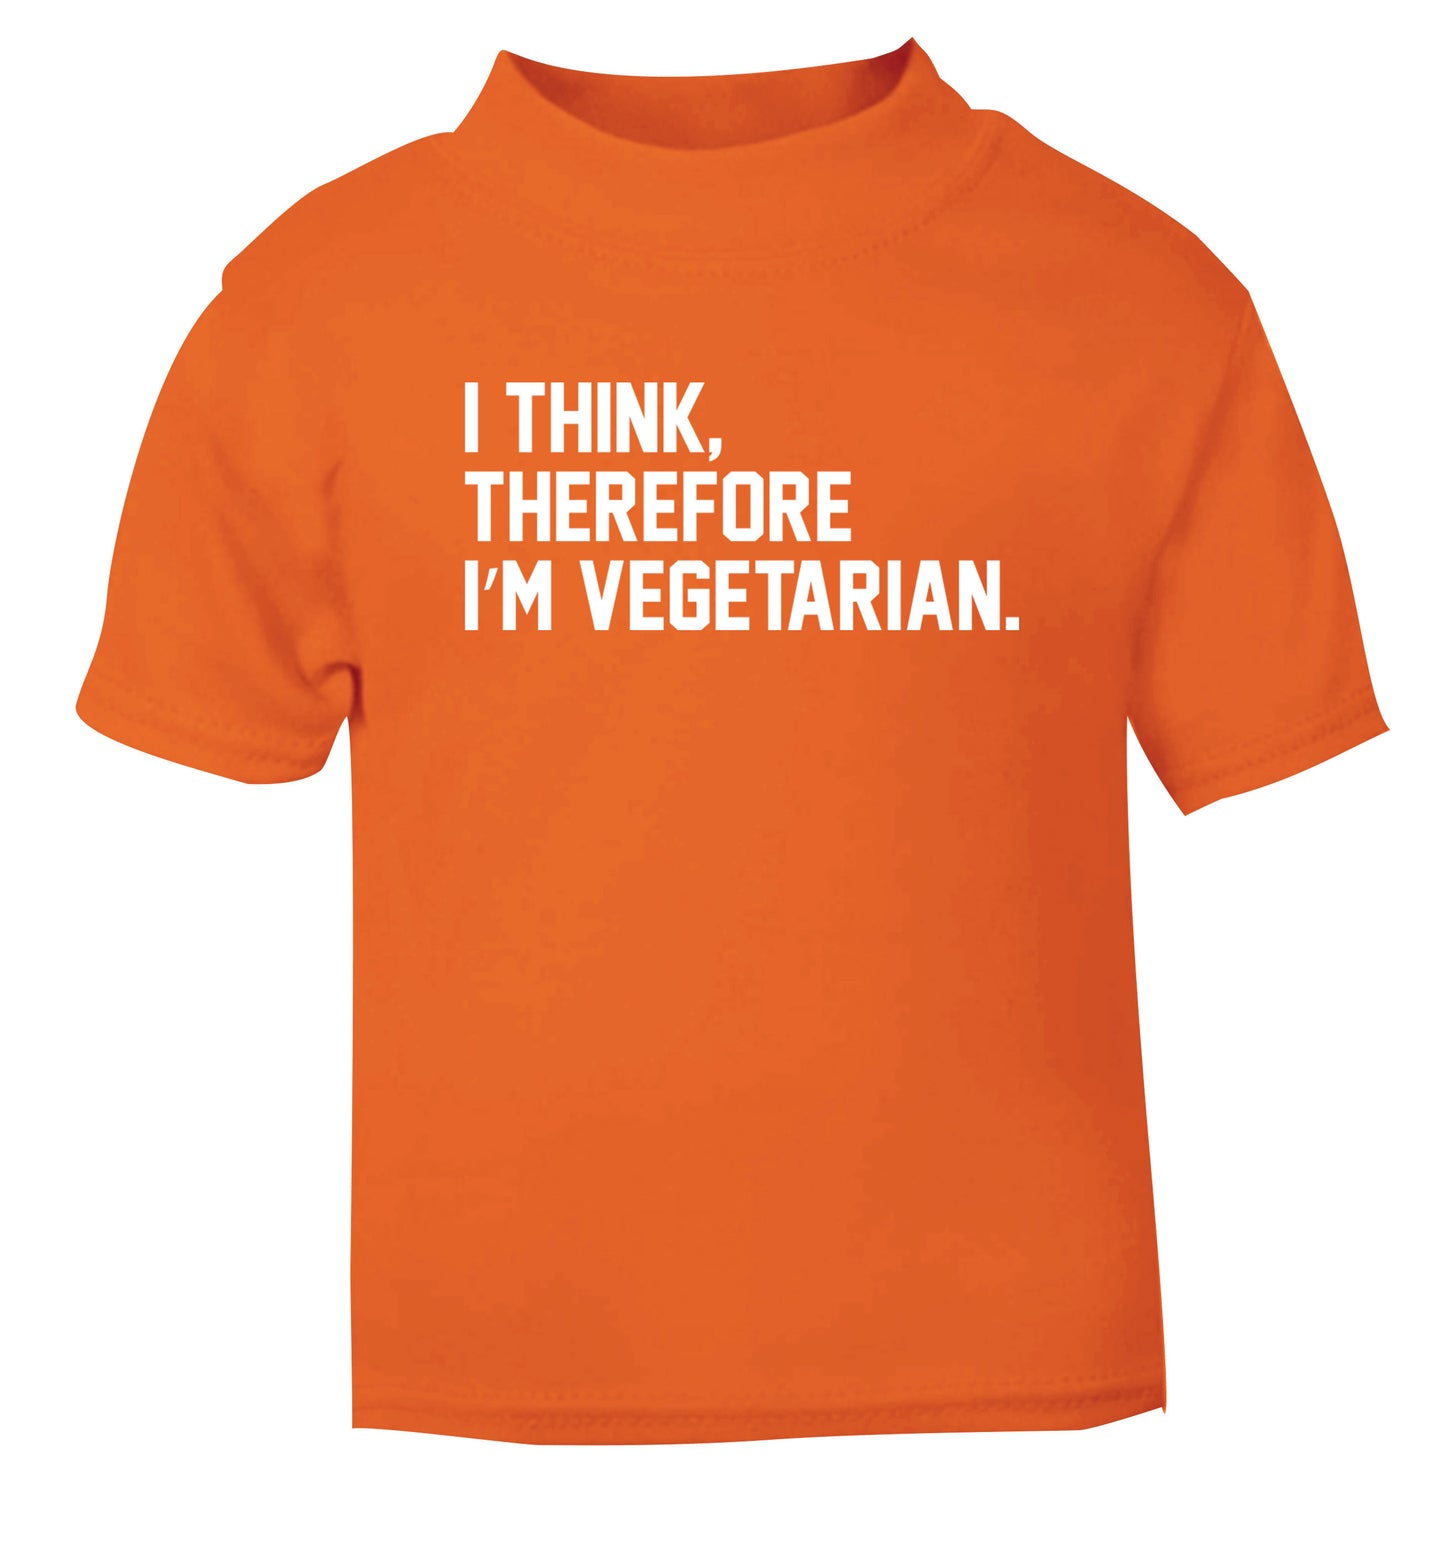 I think therefore I'm vegetarian orange Baby Toddler Tshirt 2 Years